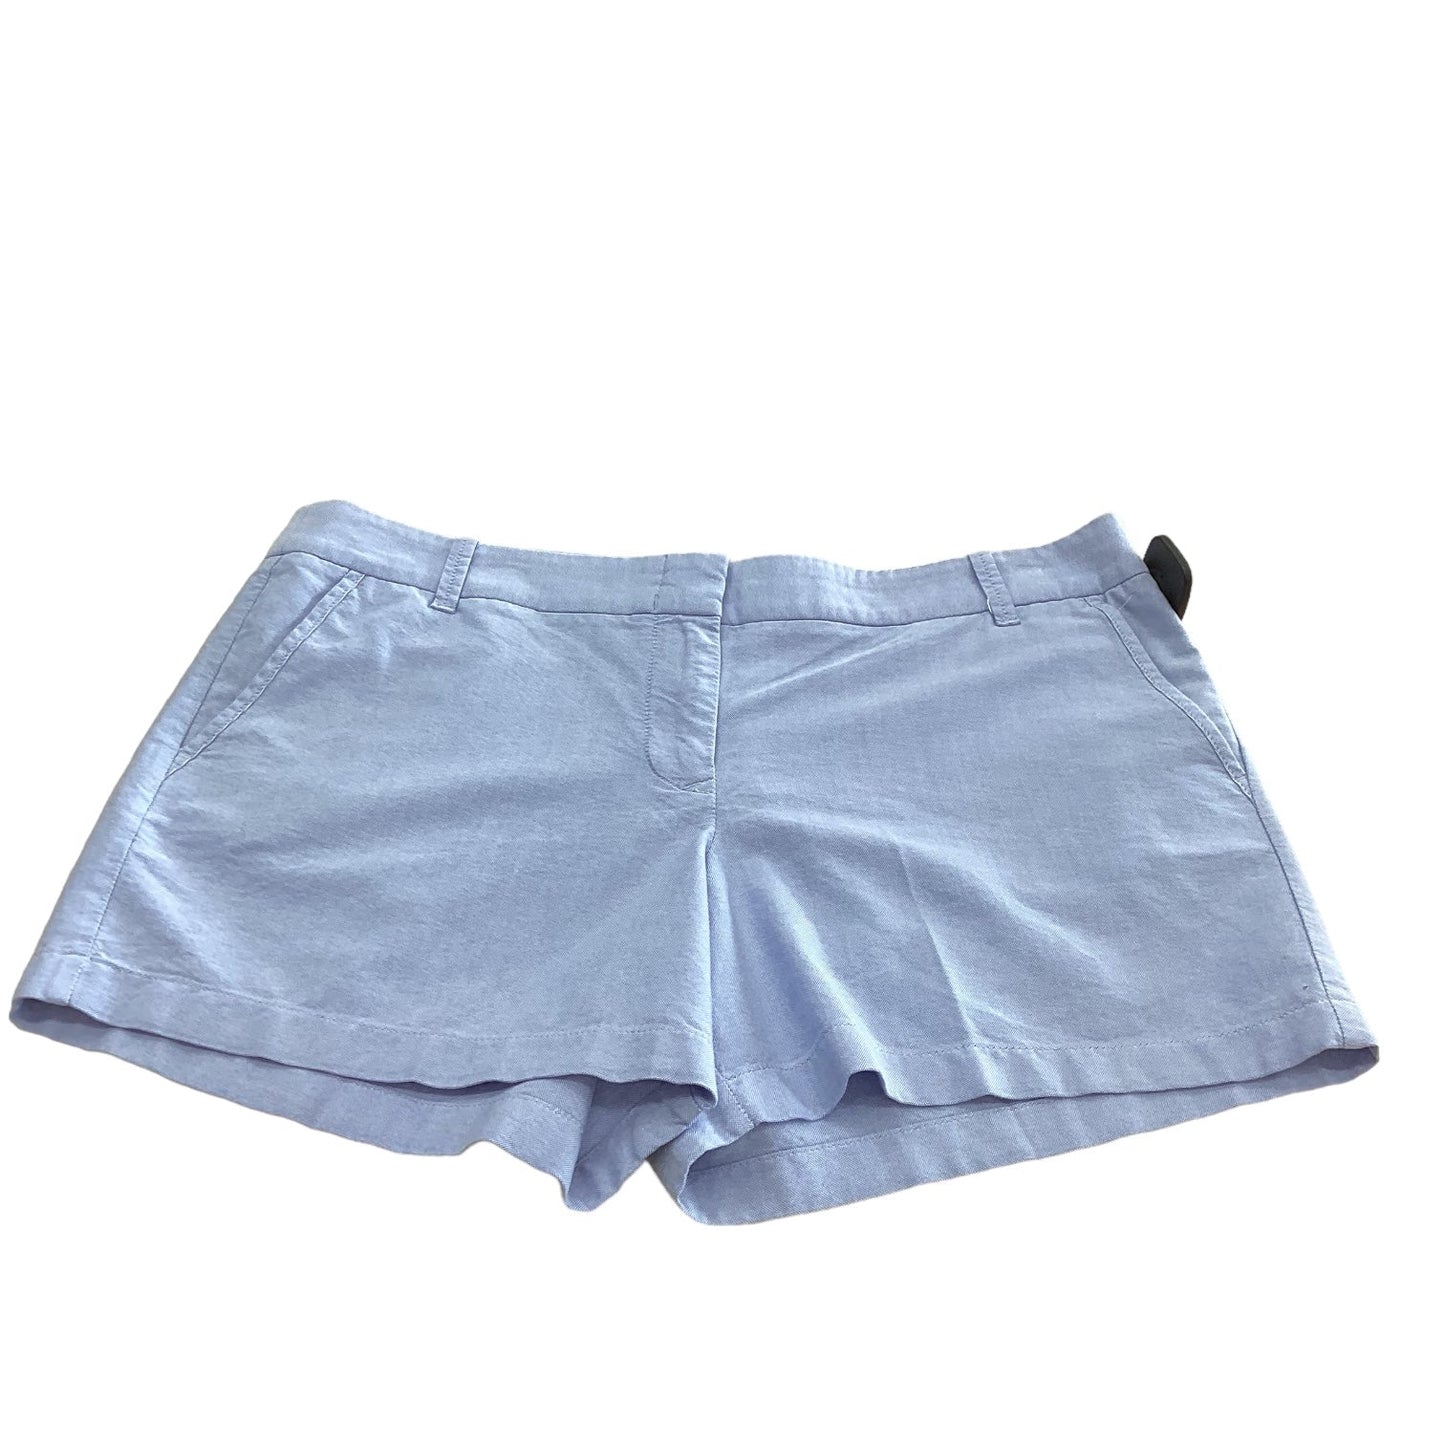 Blue Shorts J. Crew, Size 14